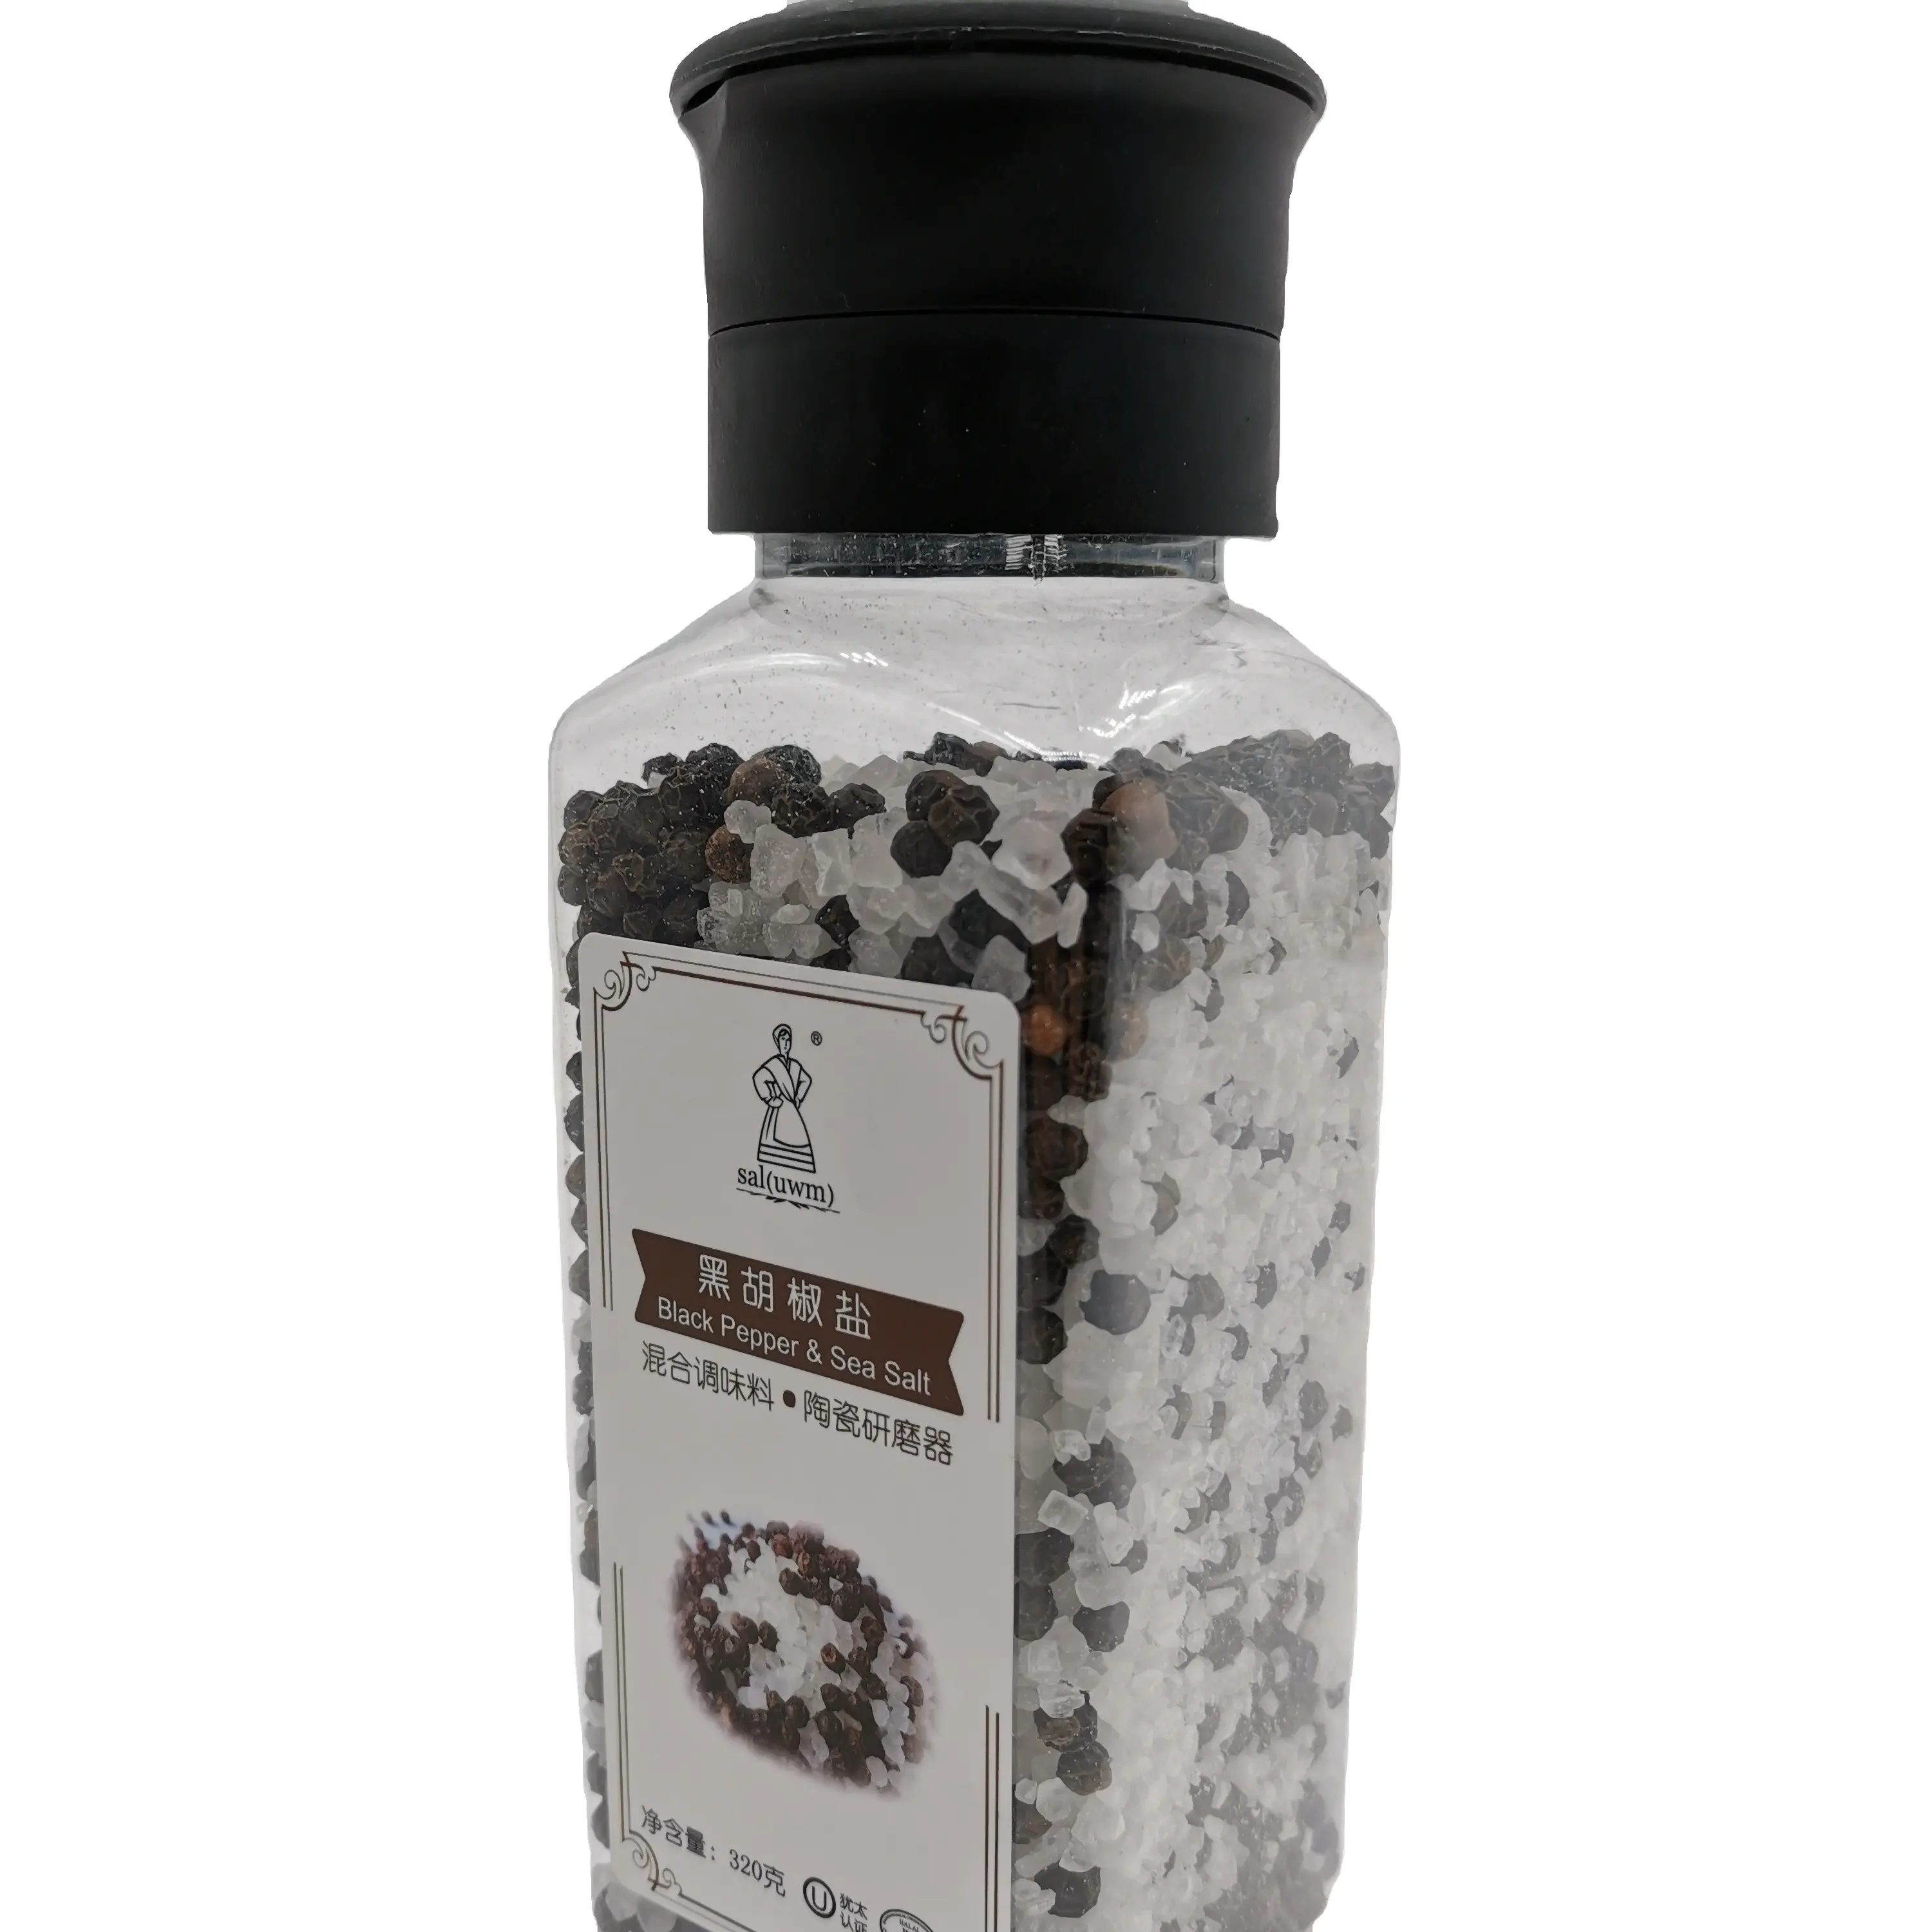 Black pepper & Sea salt with ceramic grinder mixed seasoning refillable plastic/glass bottle table salt OEM available